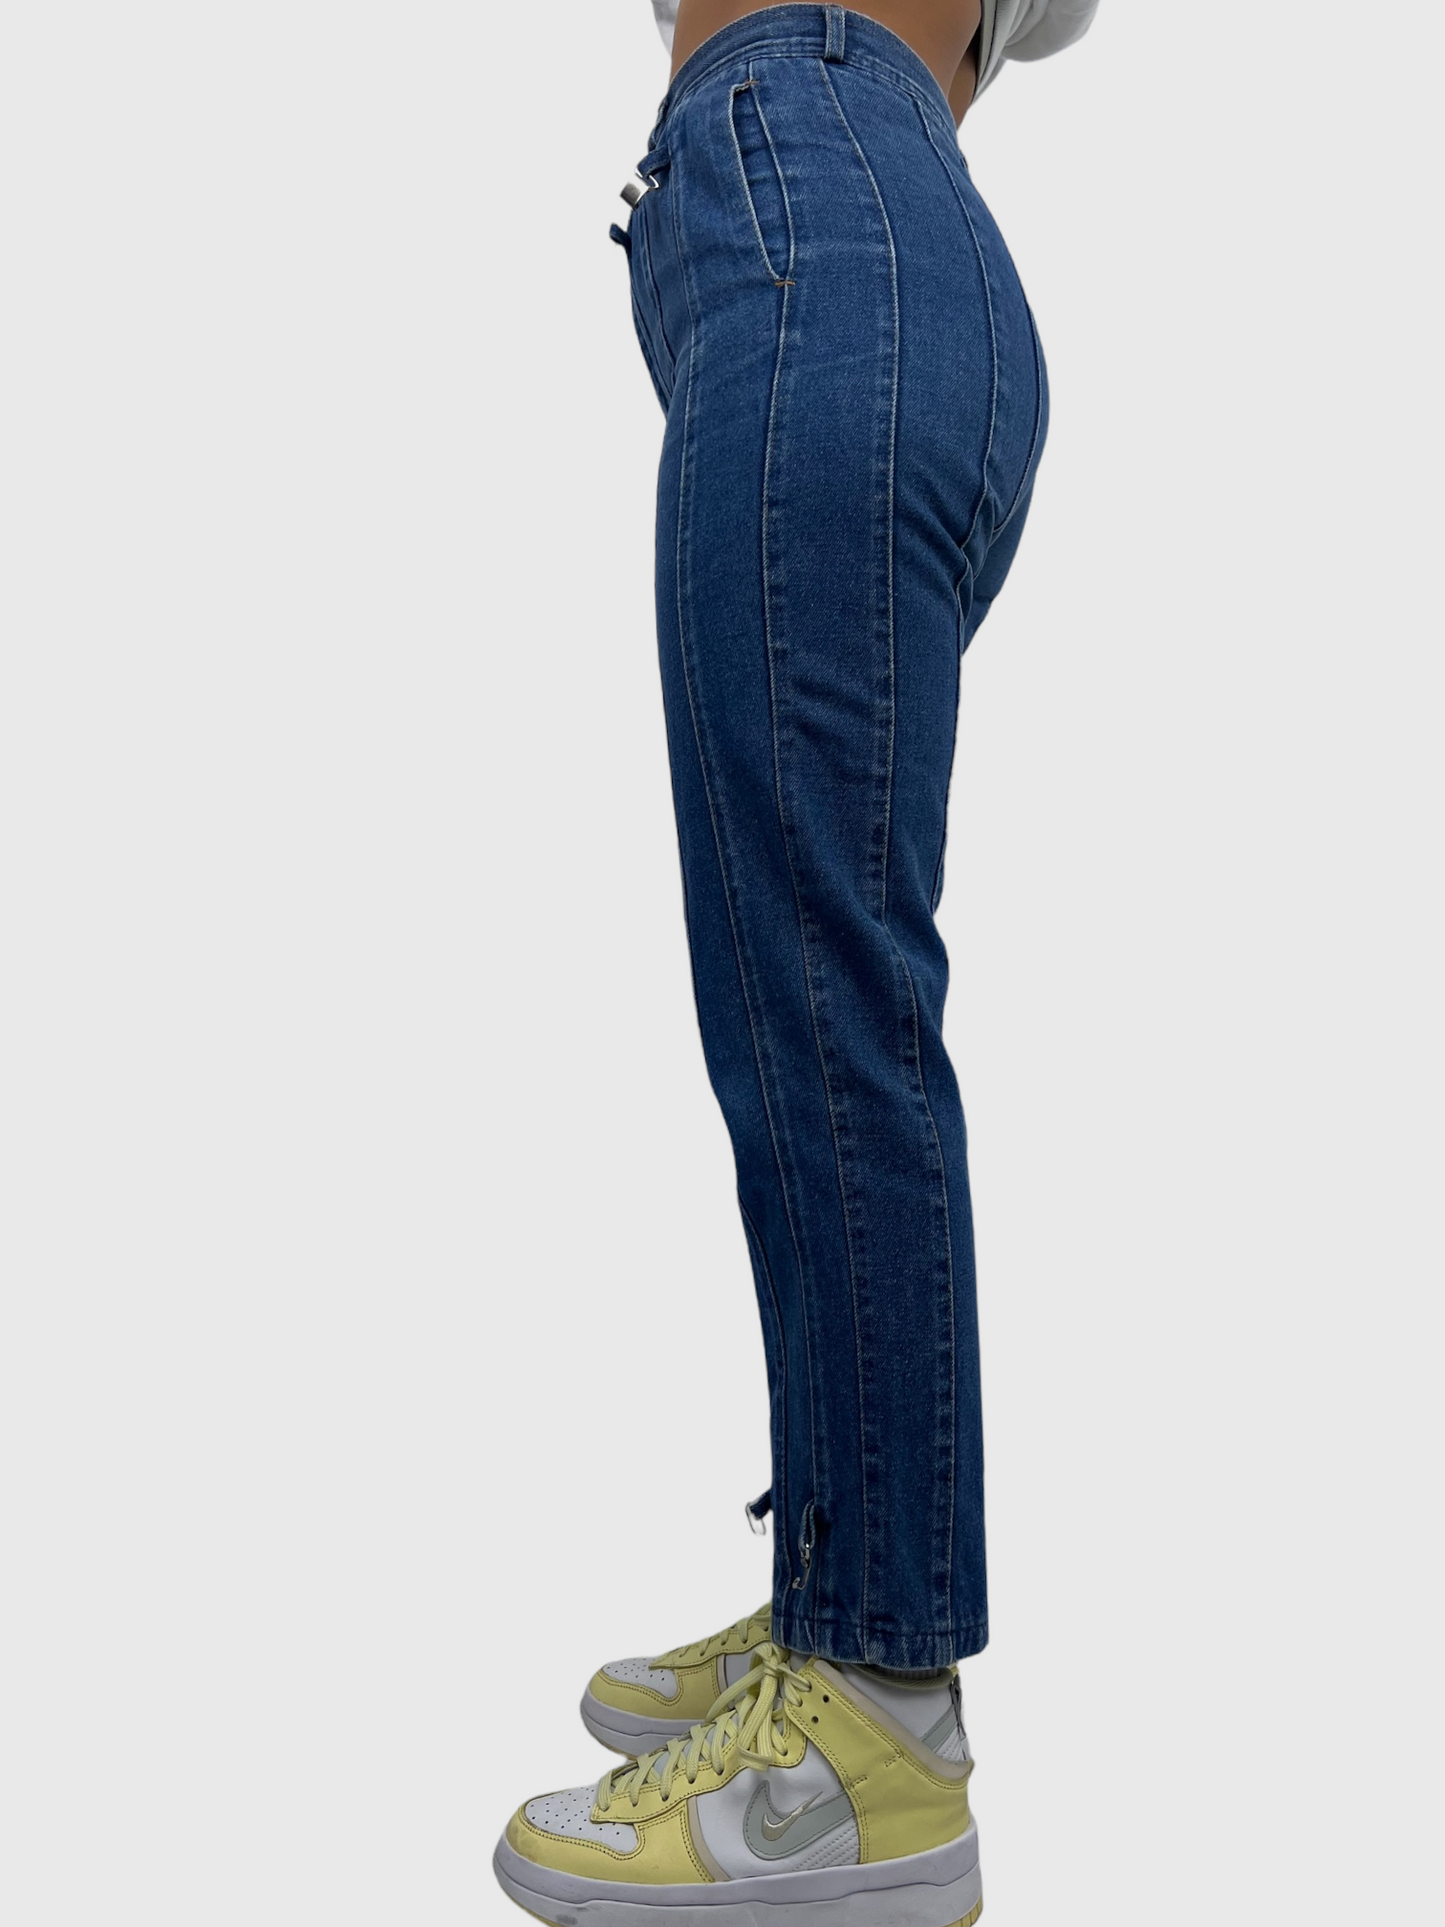 90's Vintage Denim Jeans with Buckle Details Size 6